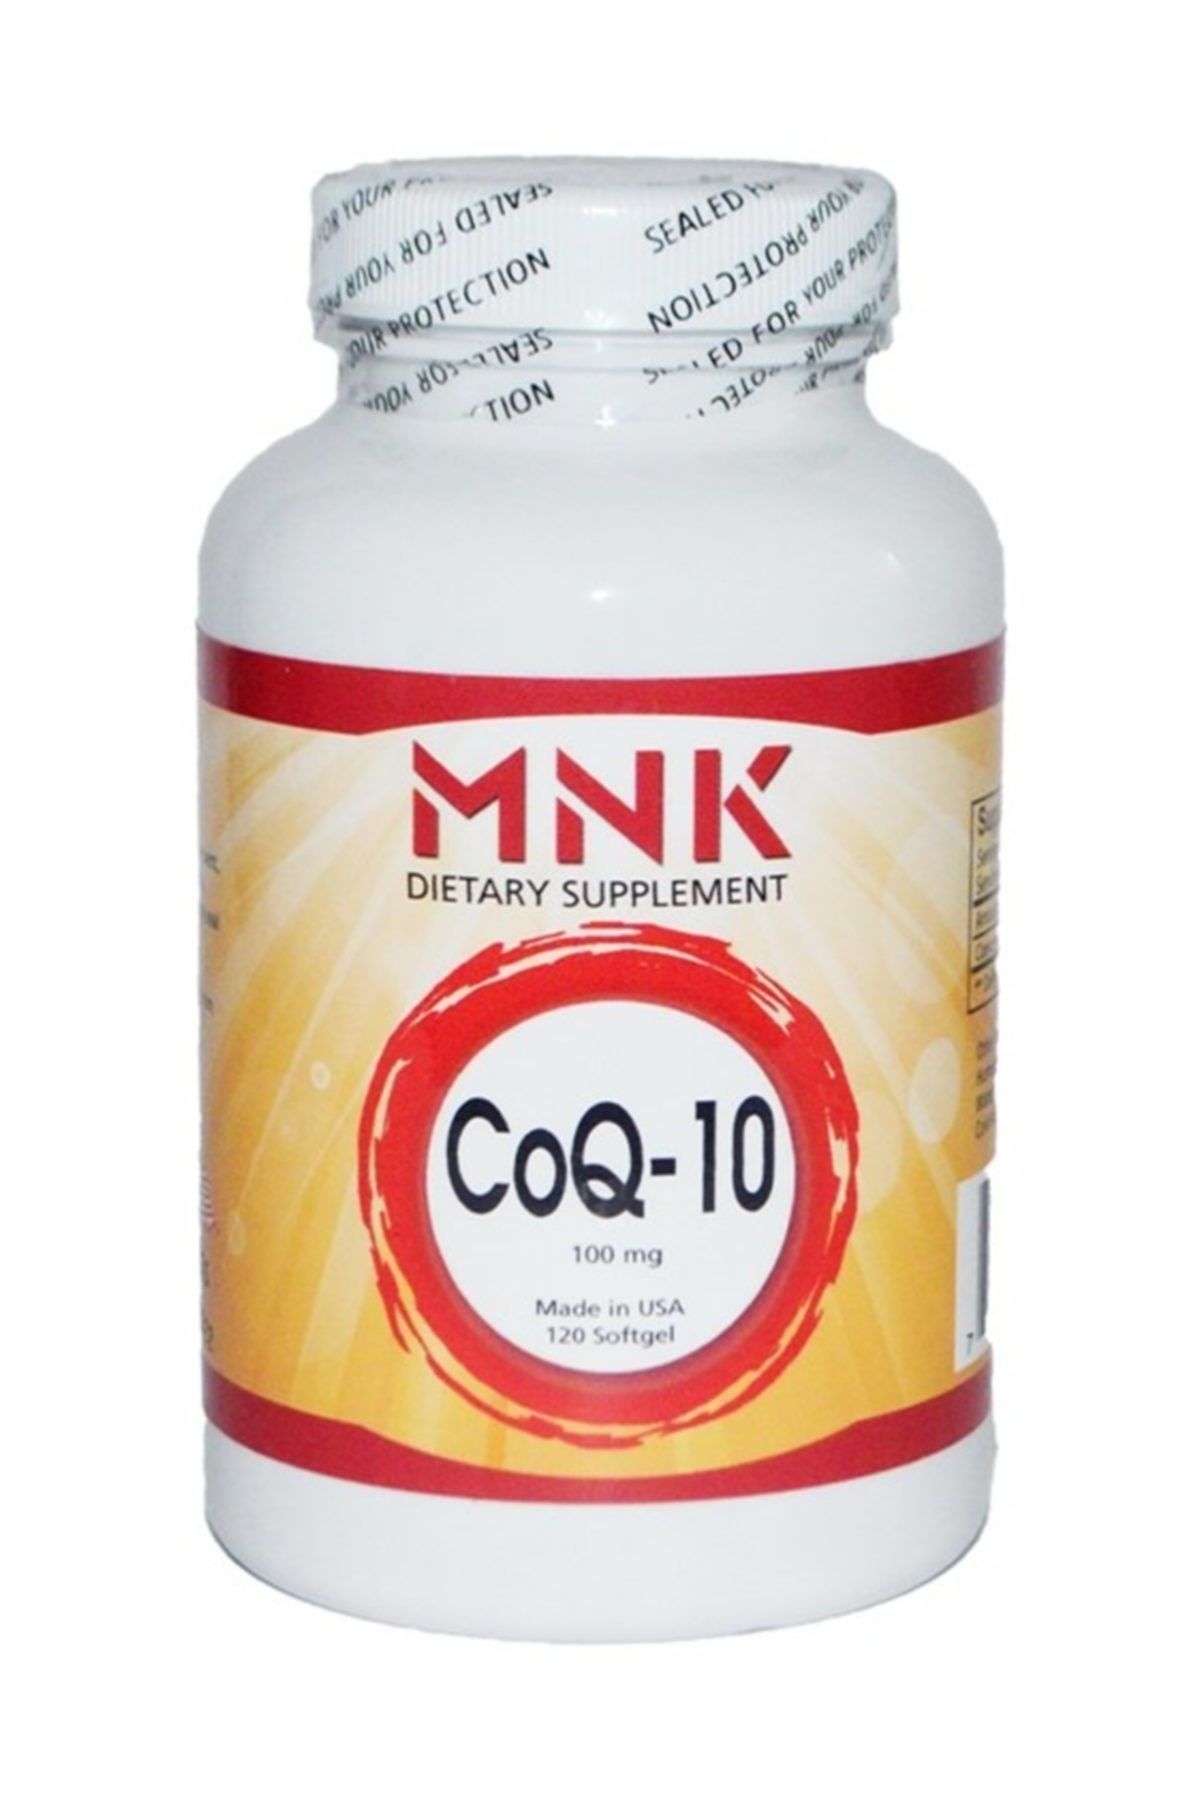 Mnk Coenzyme Q-10 120 Softgel 100 mg.